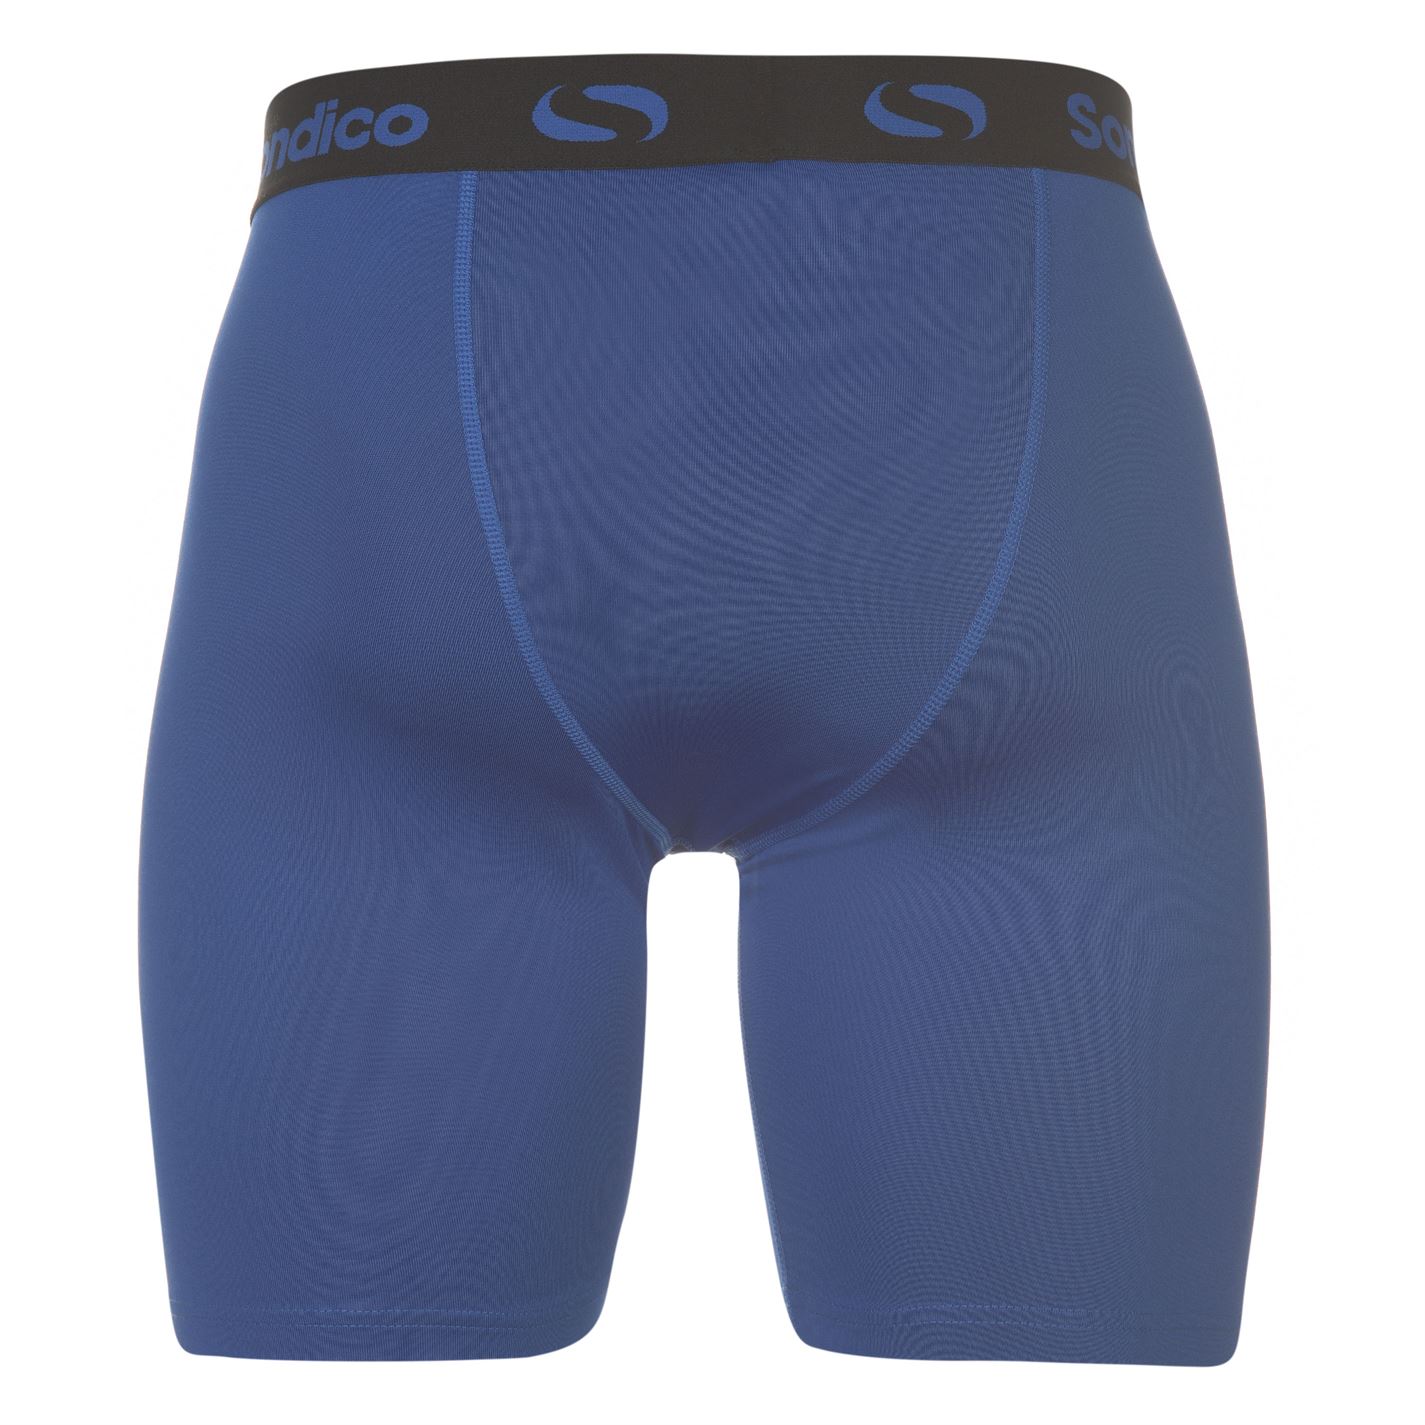 Sondico Mens Core 6 Base Layer Shorts Compression Fit Bottoms | eBay